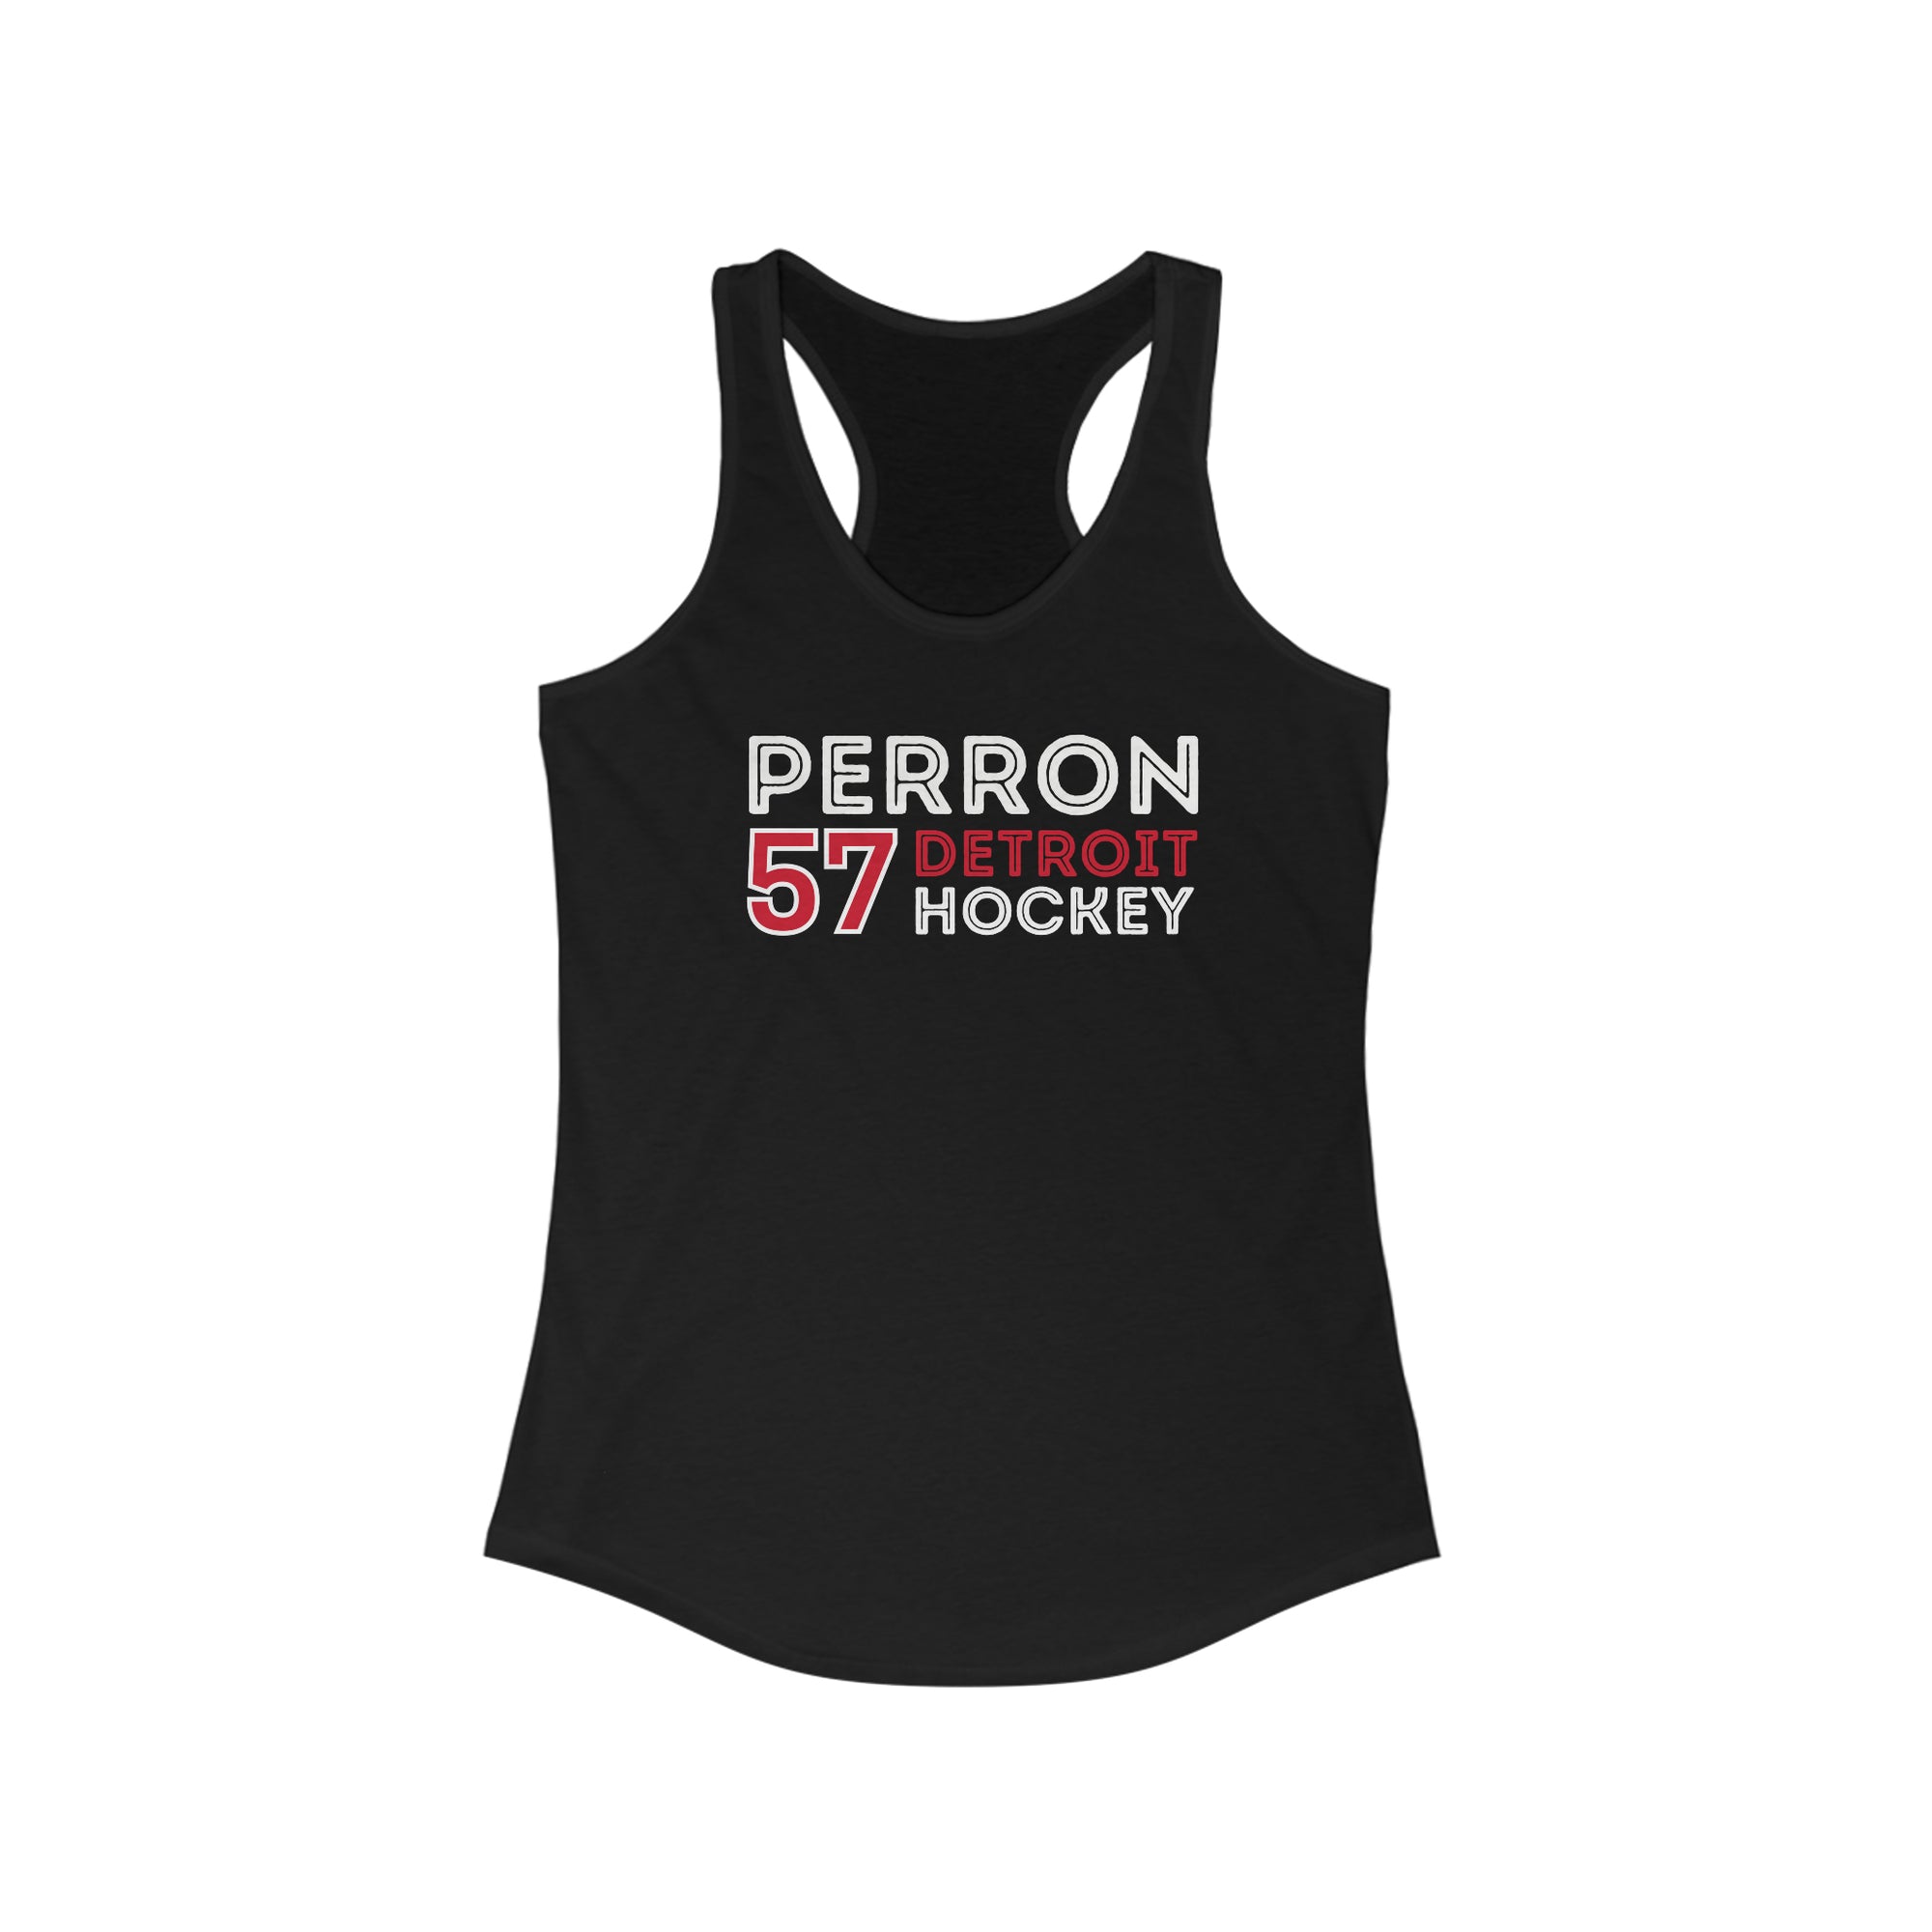 Perron 57 Detroit Hockey Grafitti Wall Design Women's Ideal Racerback Tank Top